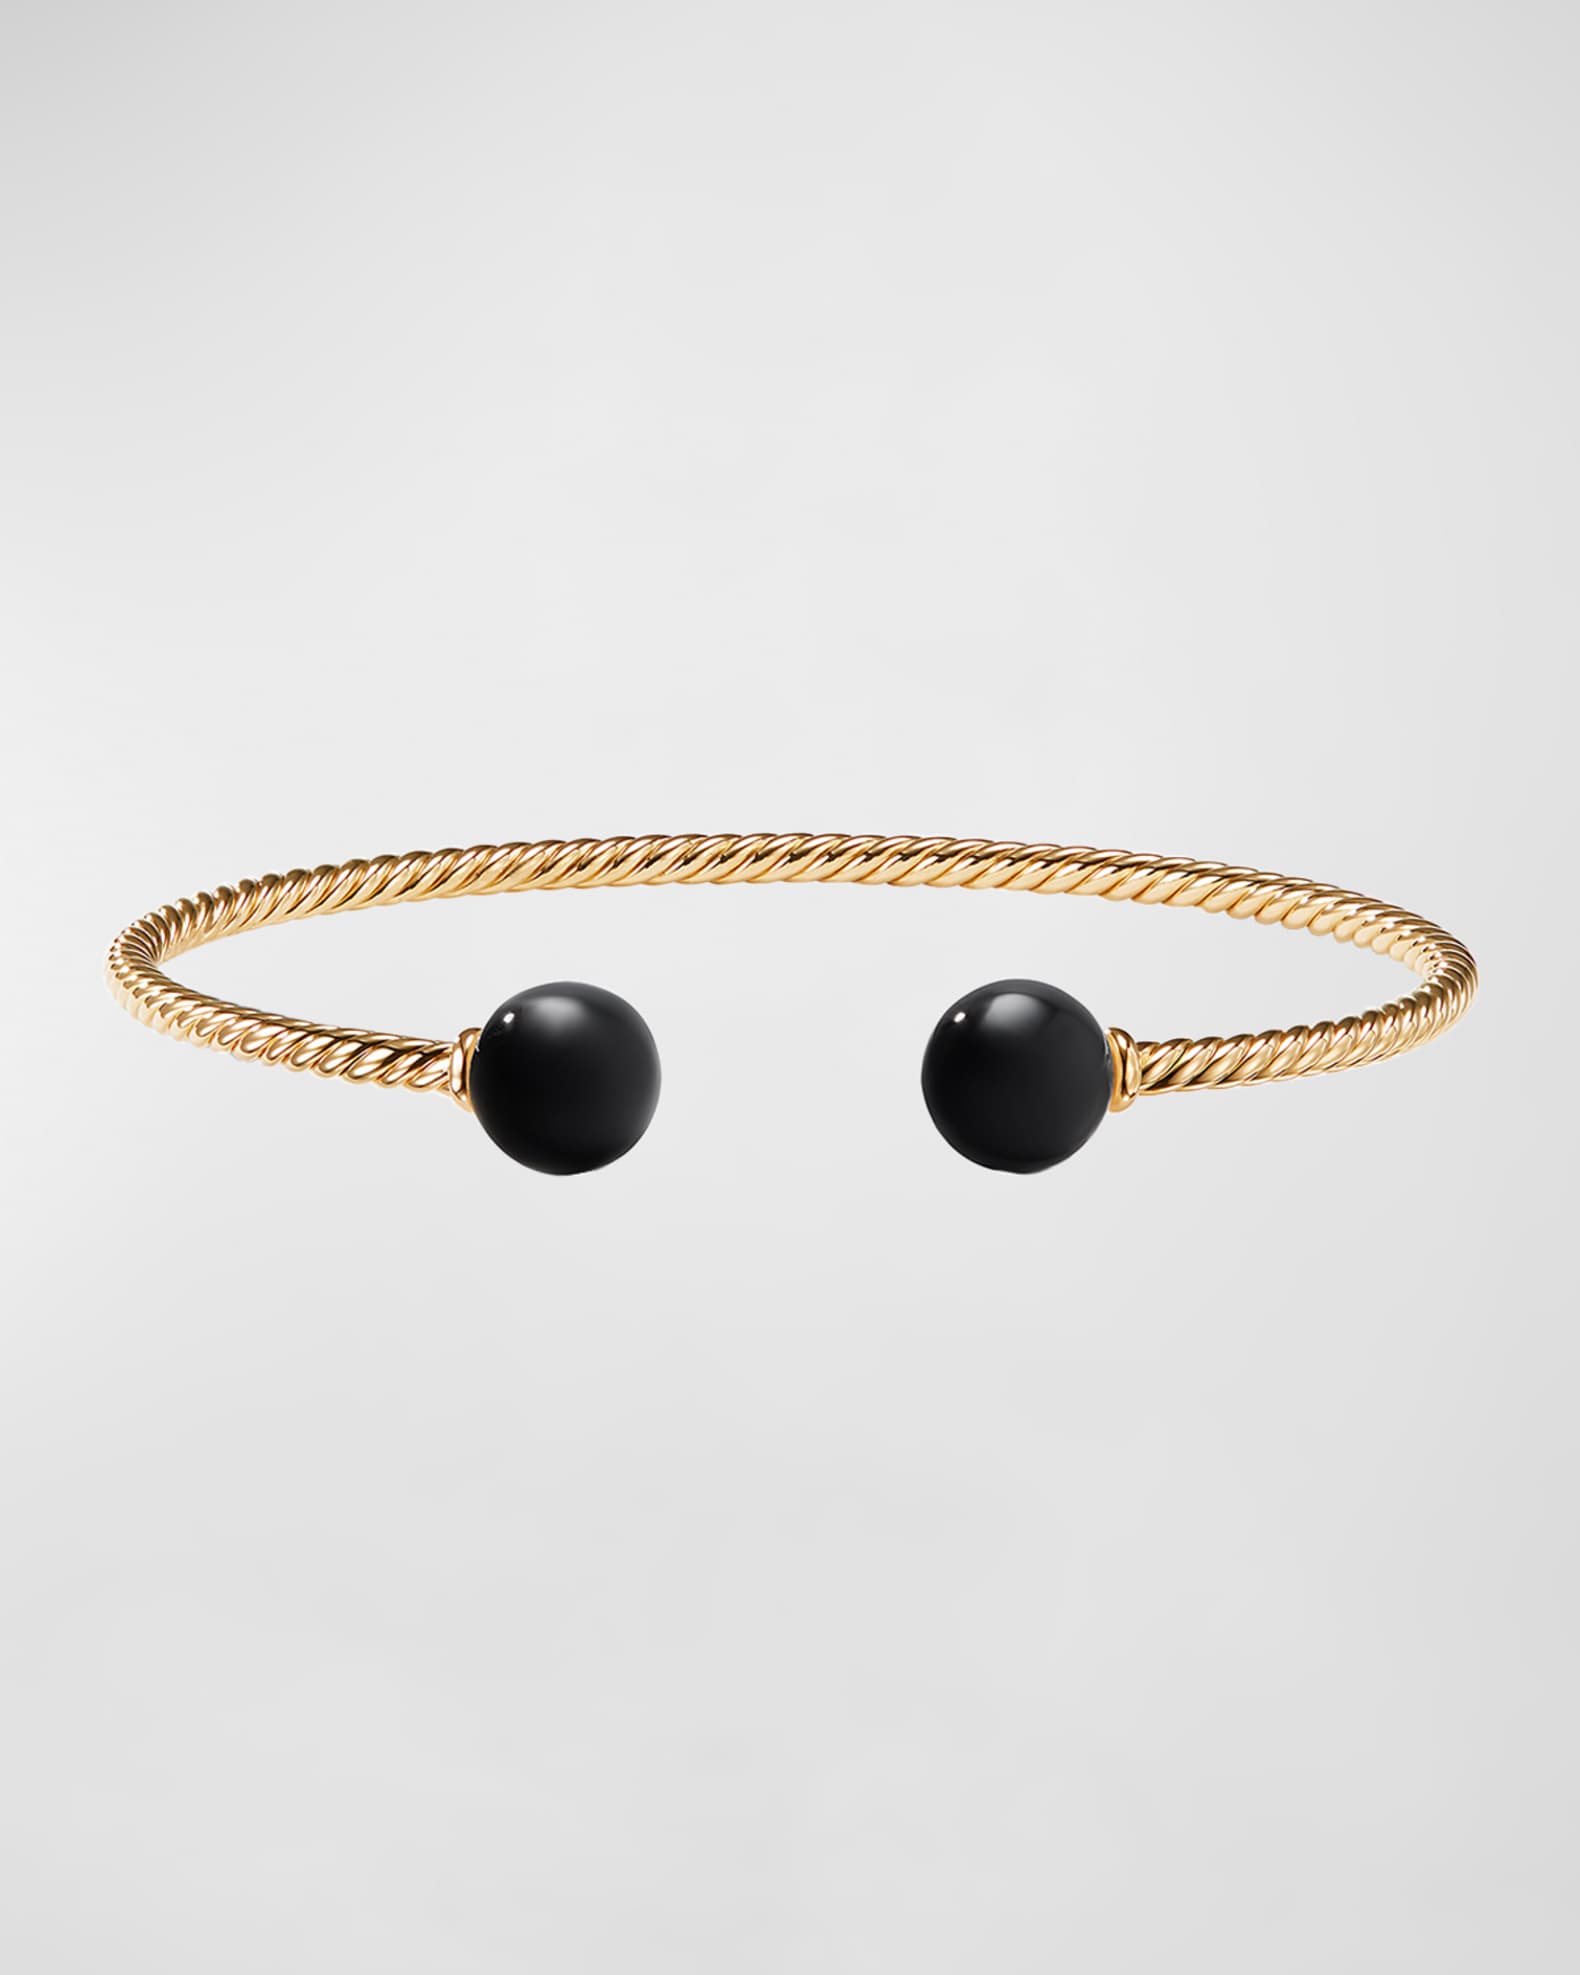 David Yurman Solari 18K Gold & Onyx Cuff Bracelet, Size L | Neiman Marcus